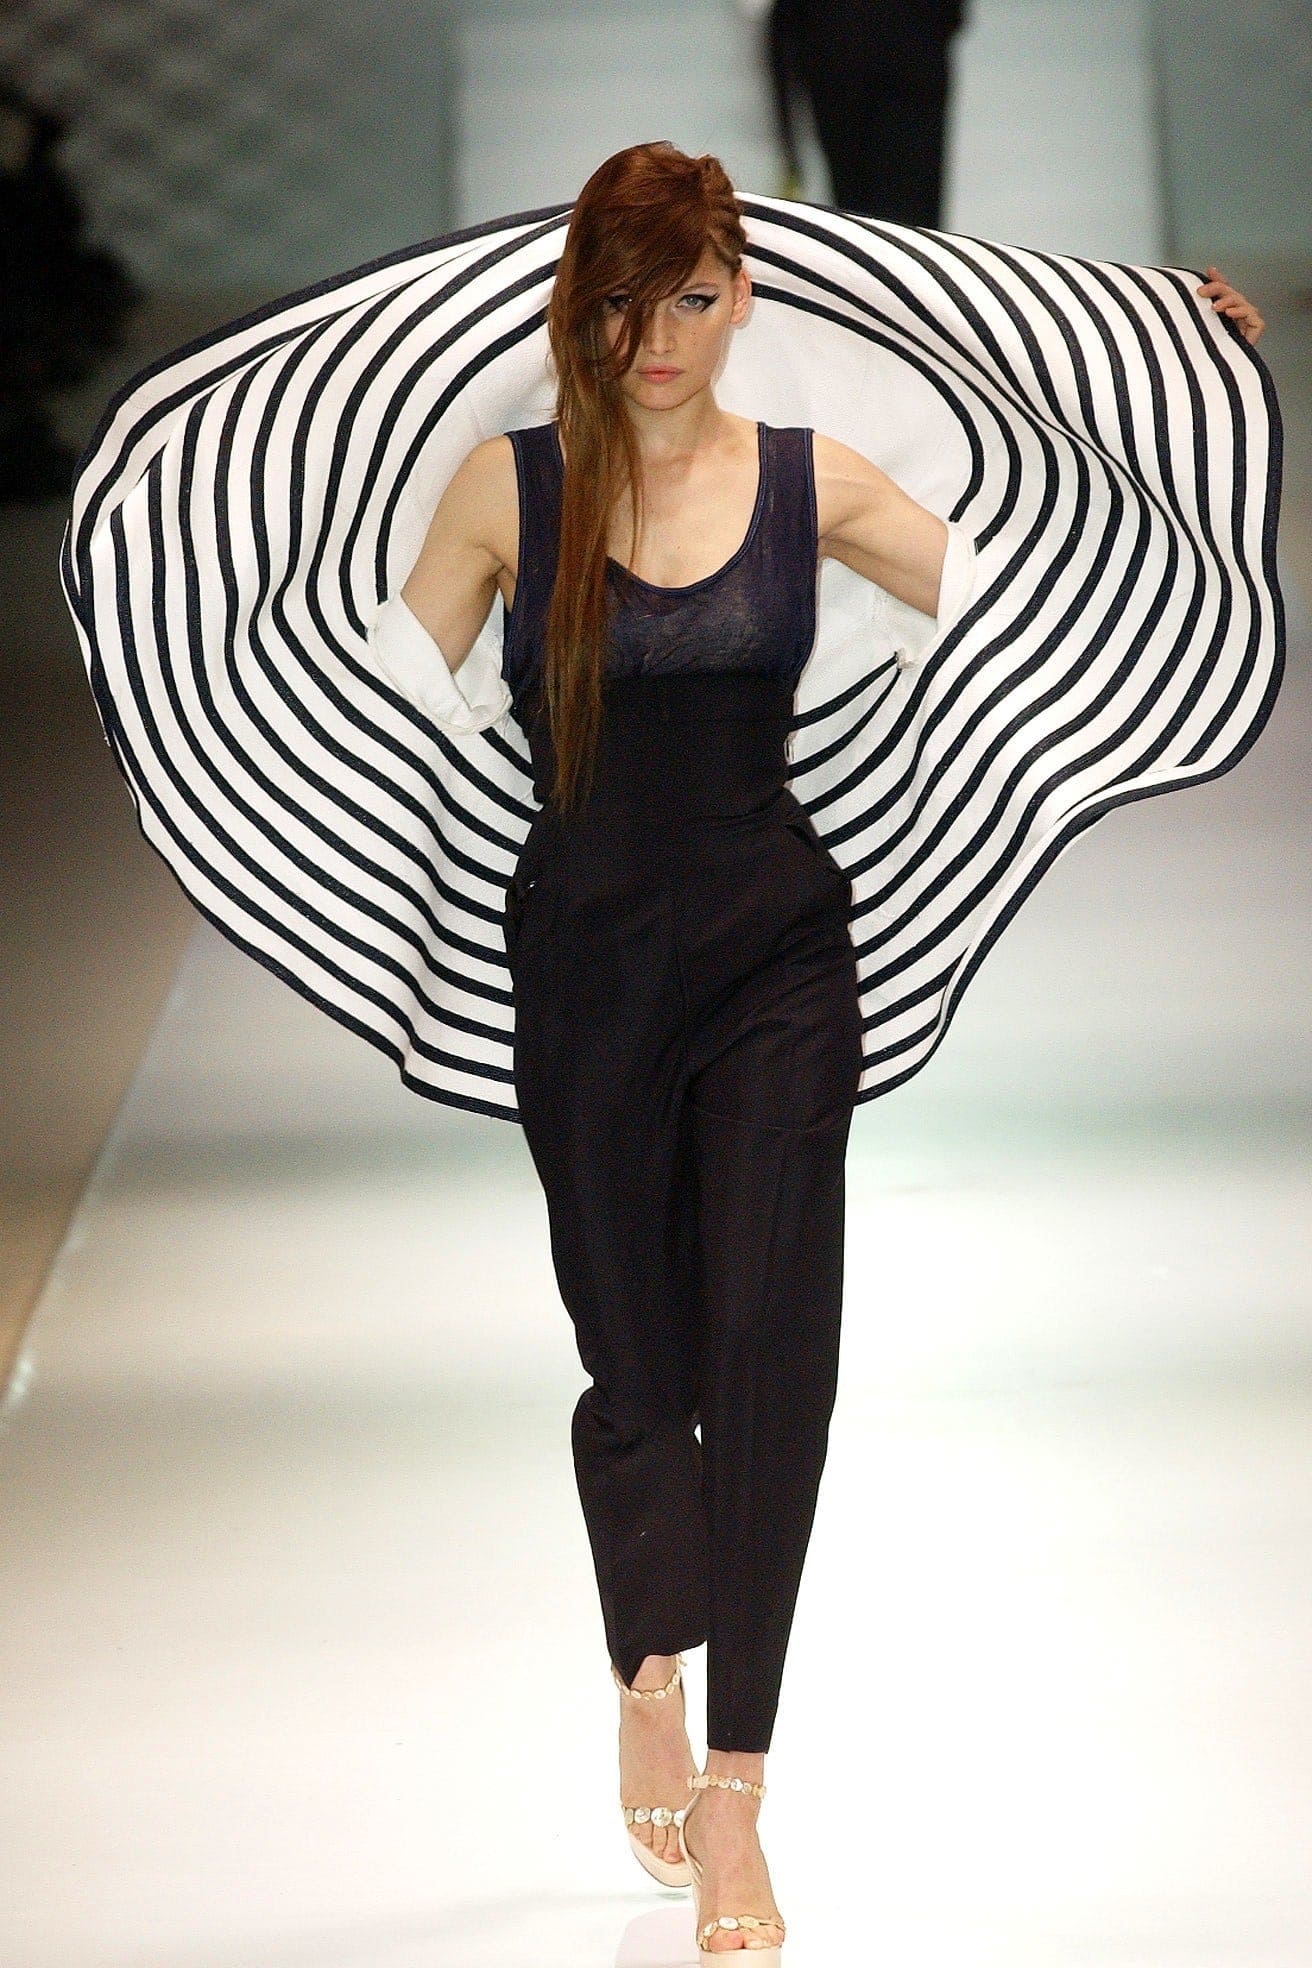 Jean Paul Gaultier Spring Summer 2003 Haute Couture, model Laetitia Casta